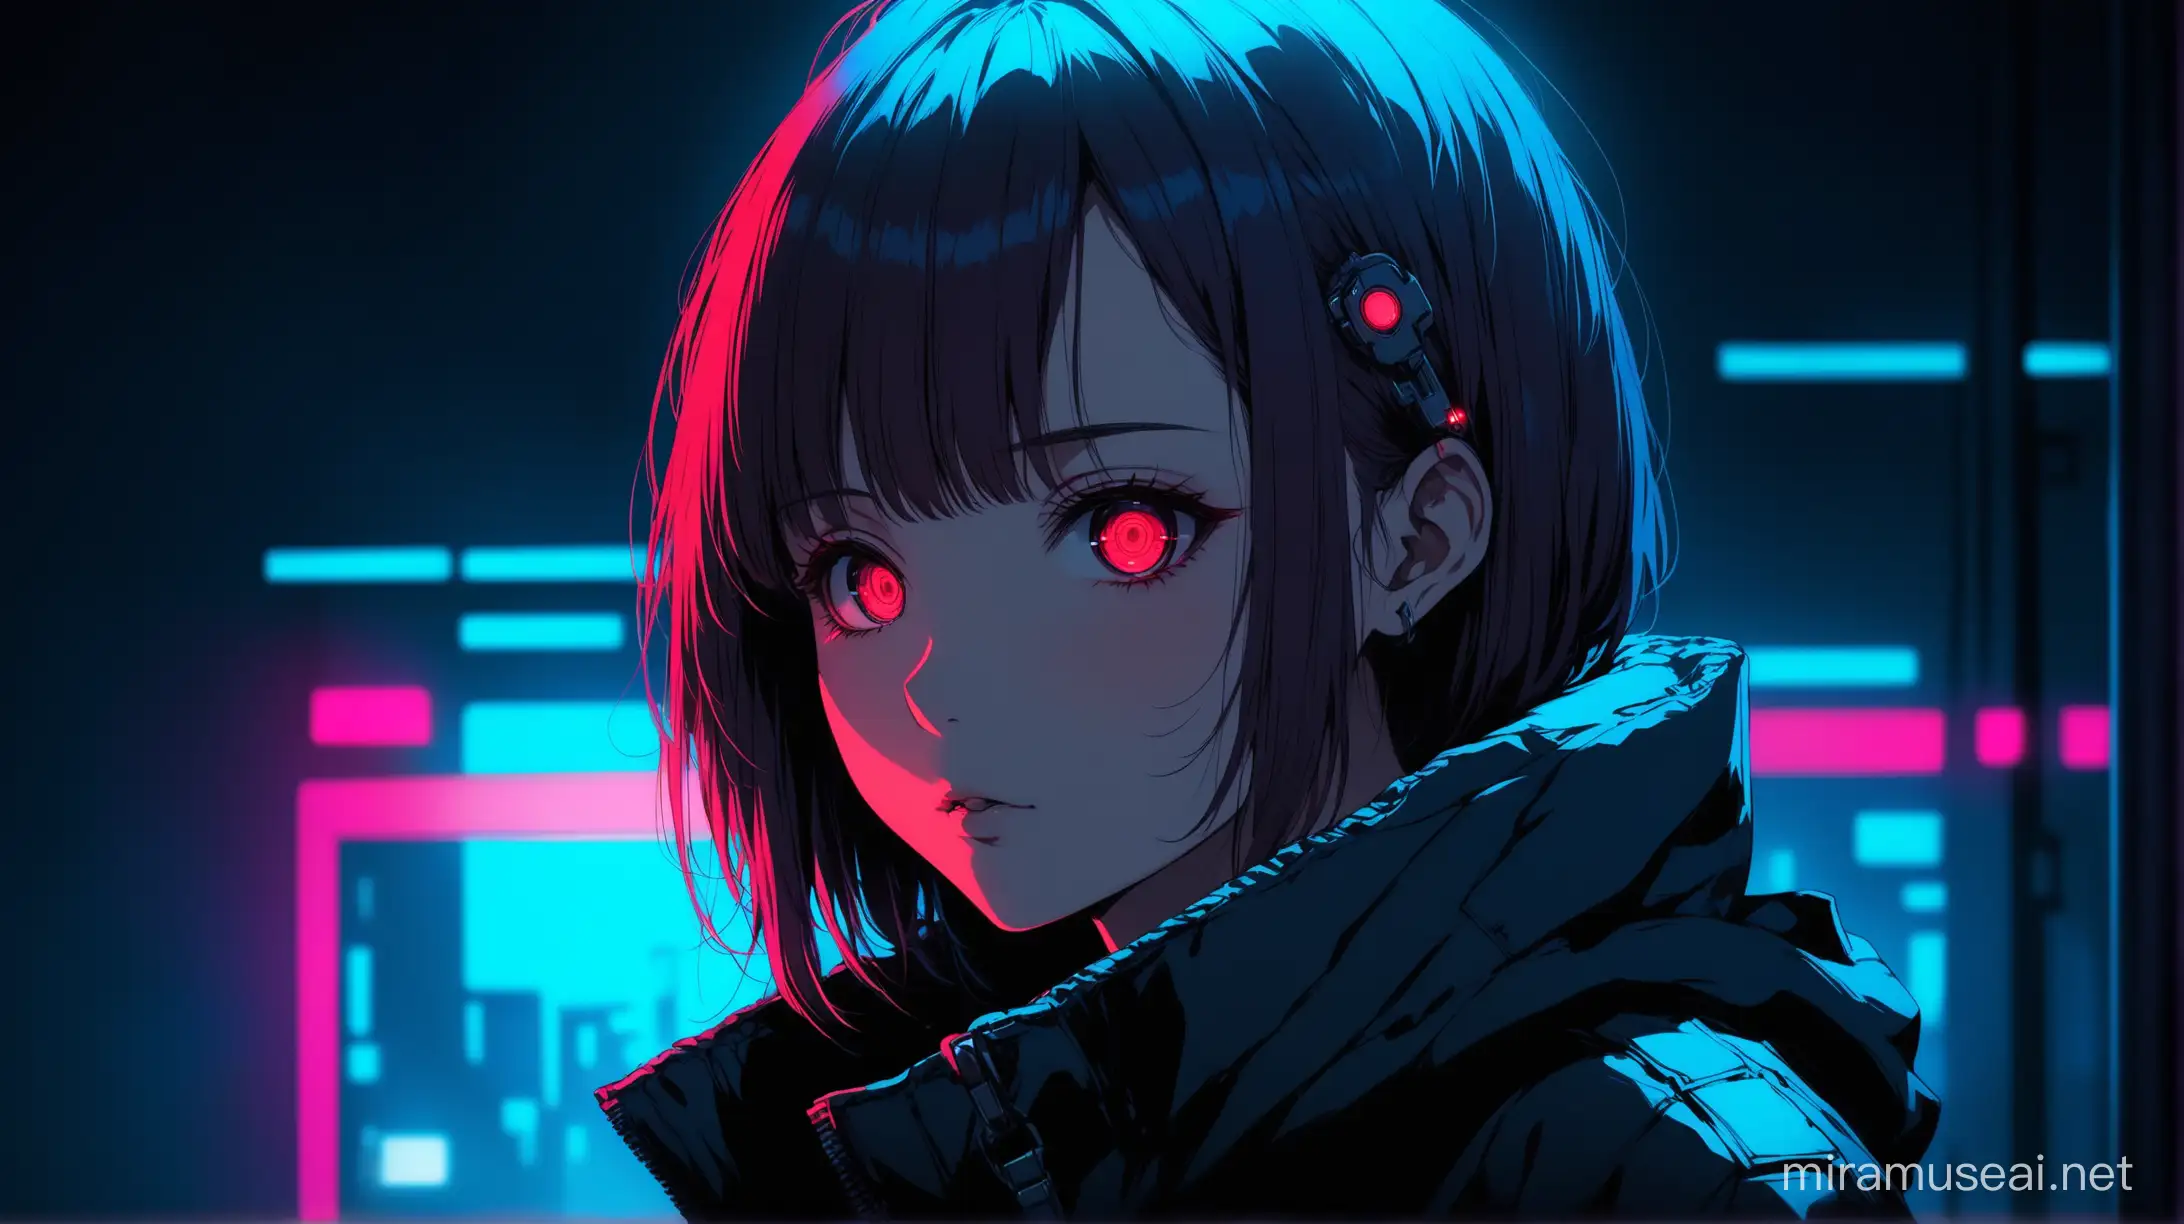 Anime girl, cyberpunk, dramatic lighting, high detail, red key light, soft blue fill light, medium shot, eye level